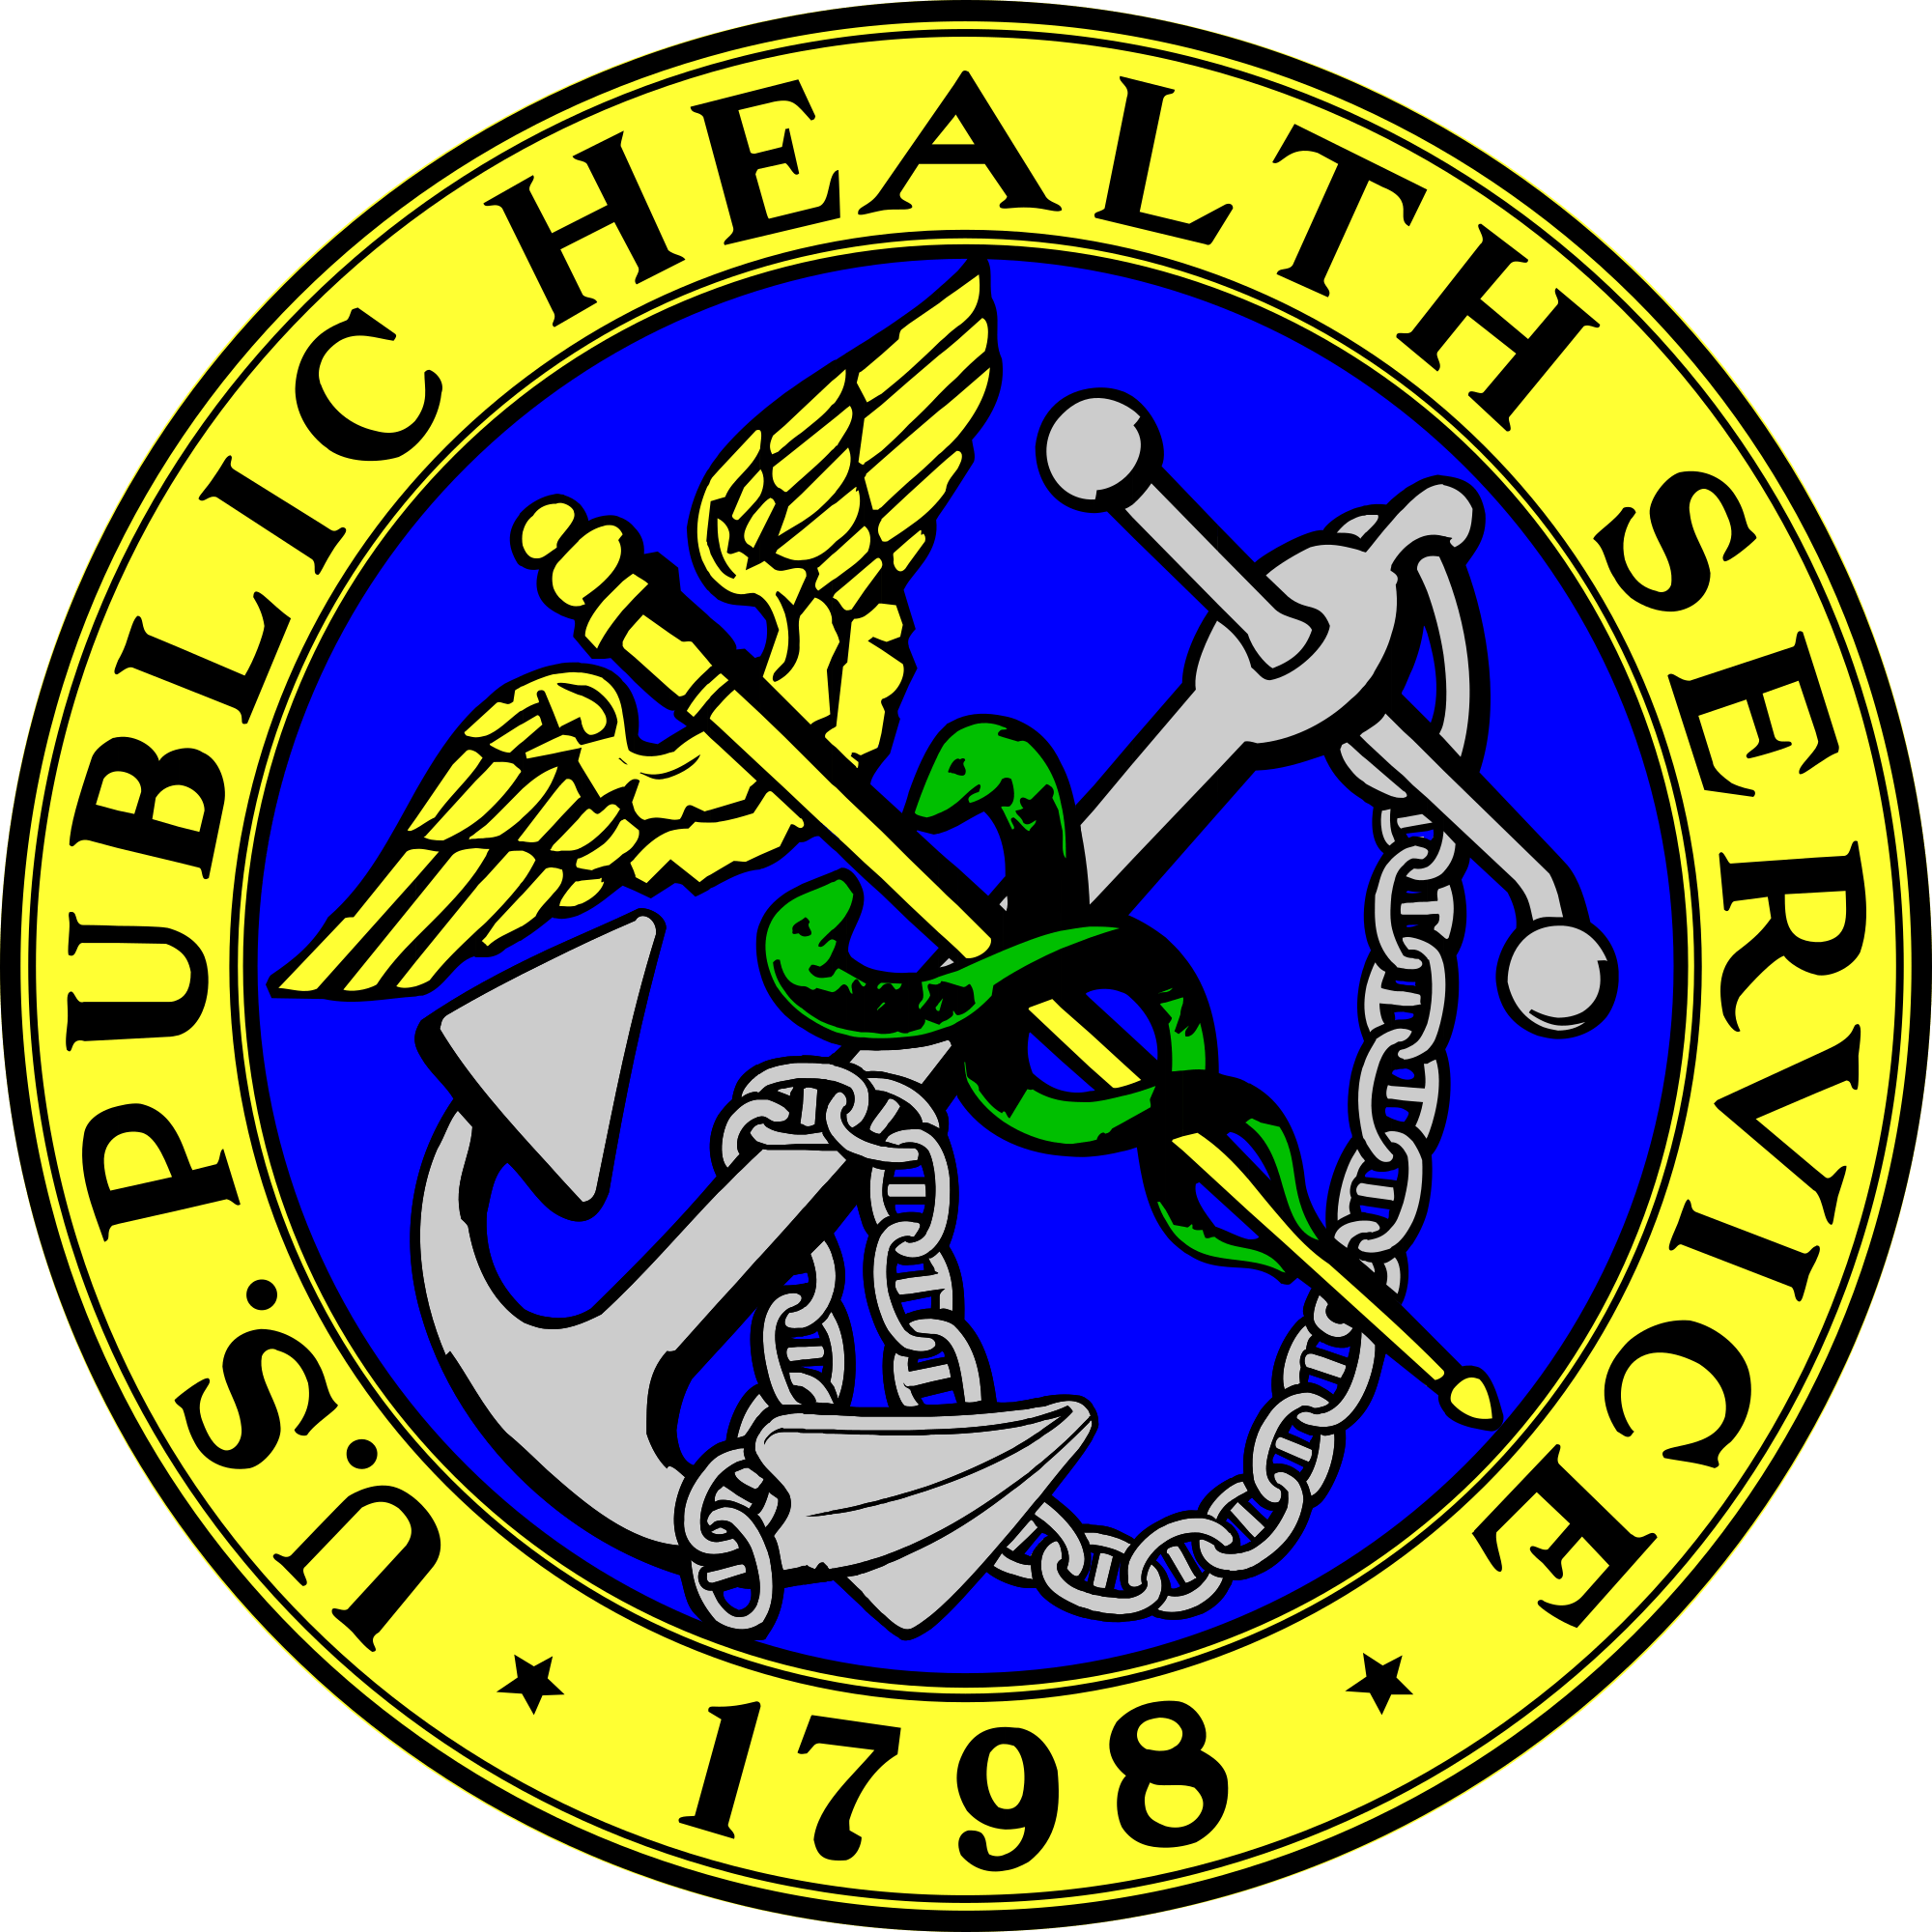 Health Service Logo - United States Public Health Service